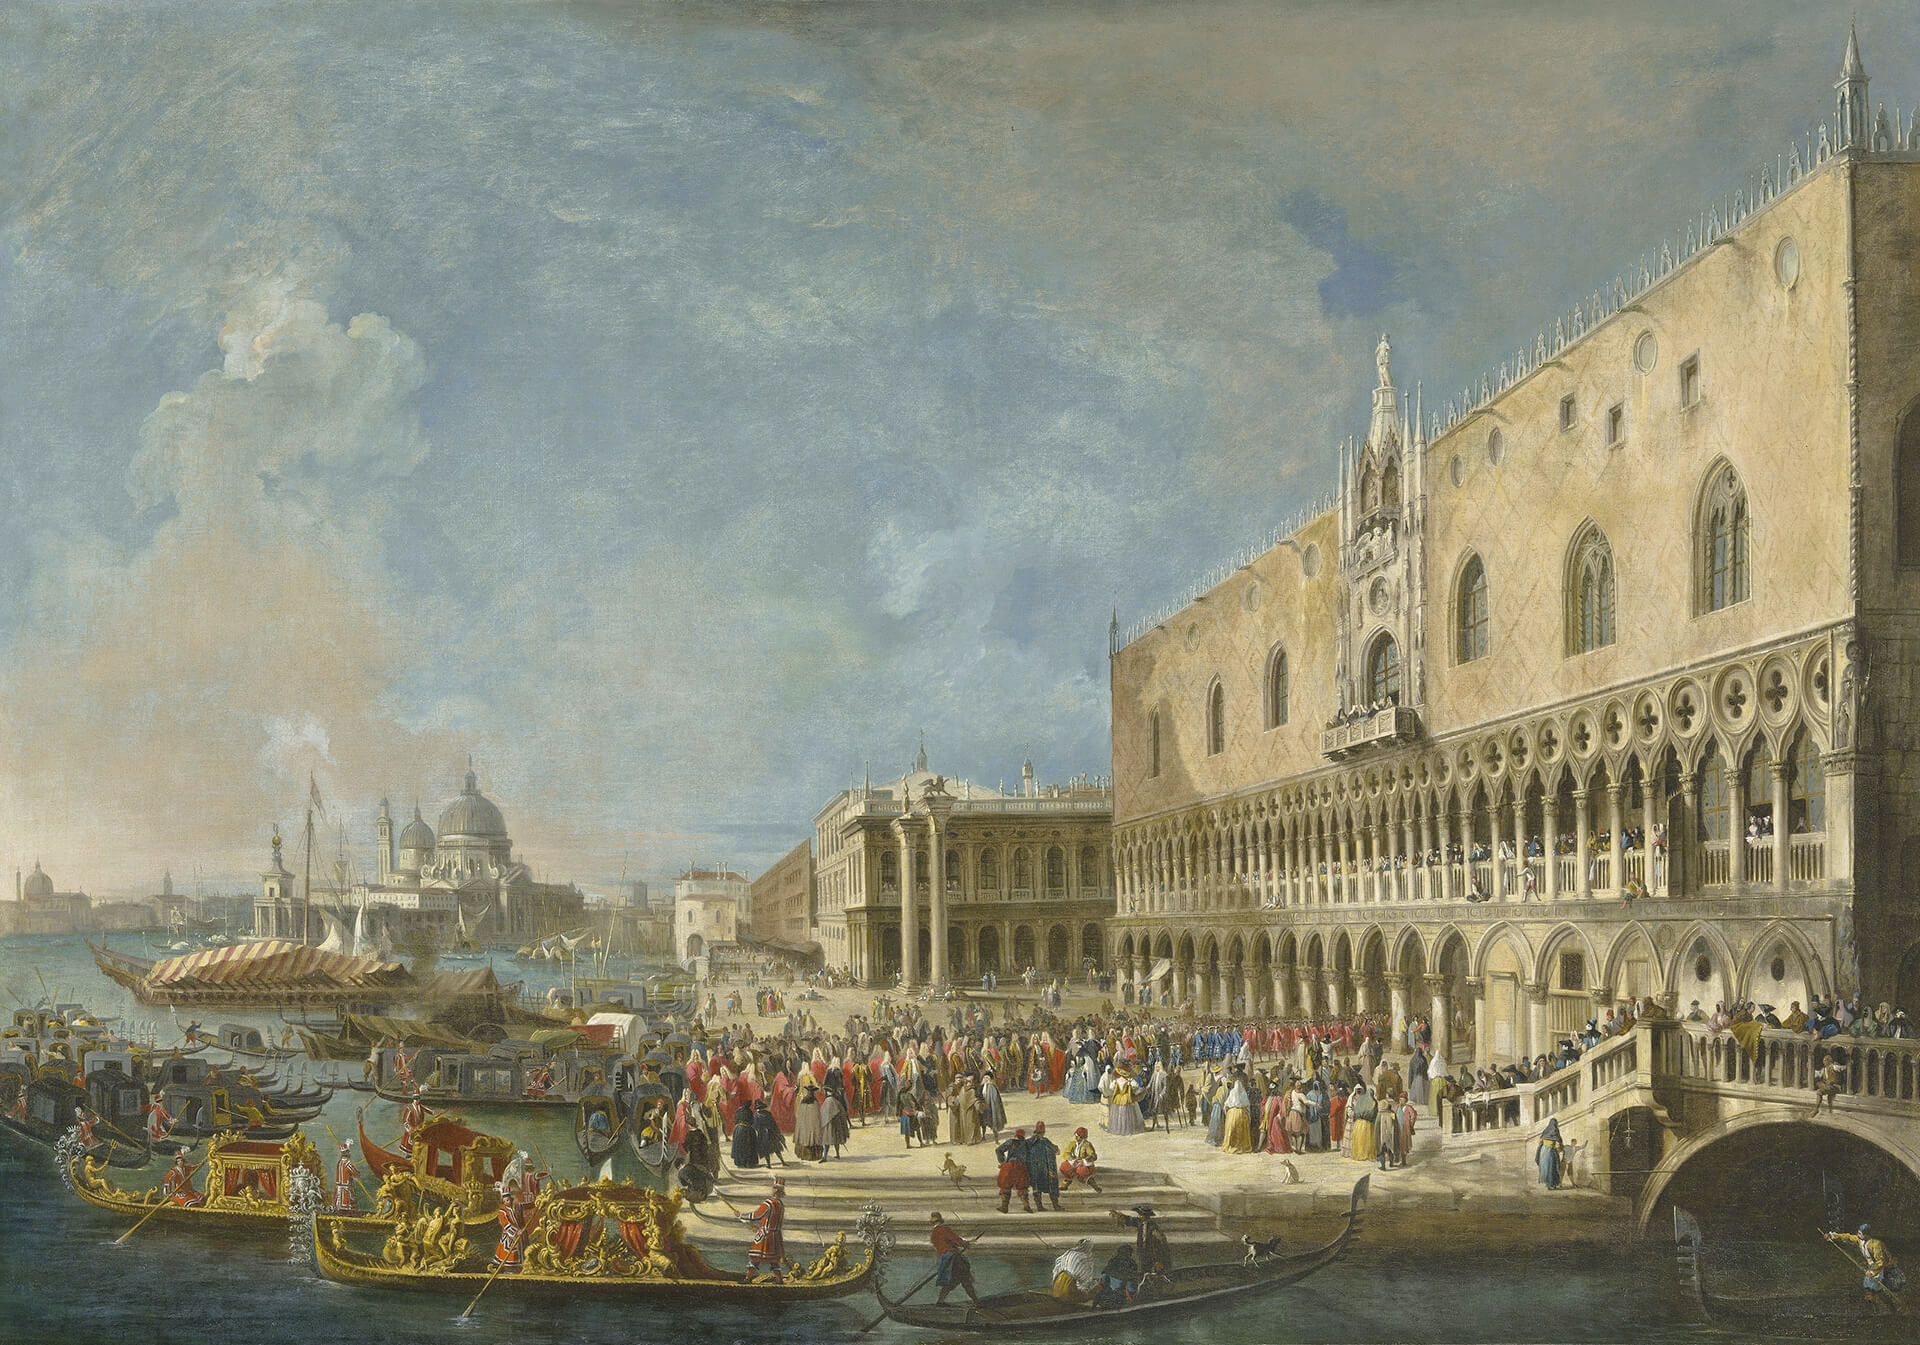 Giovanni Antonio Canal, called Canaletto and Studio